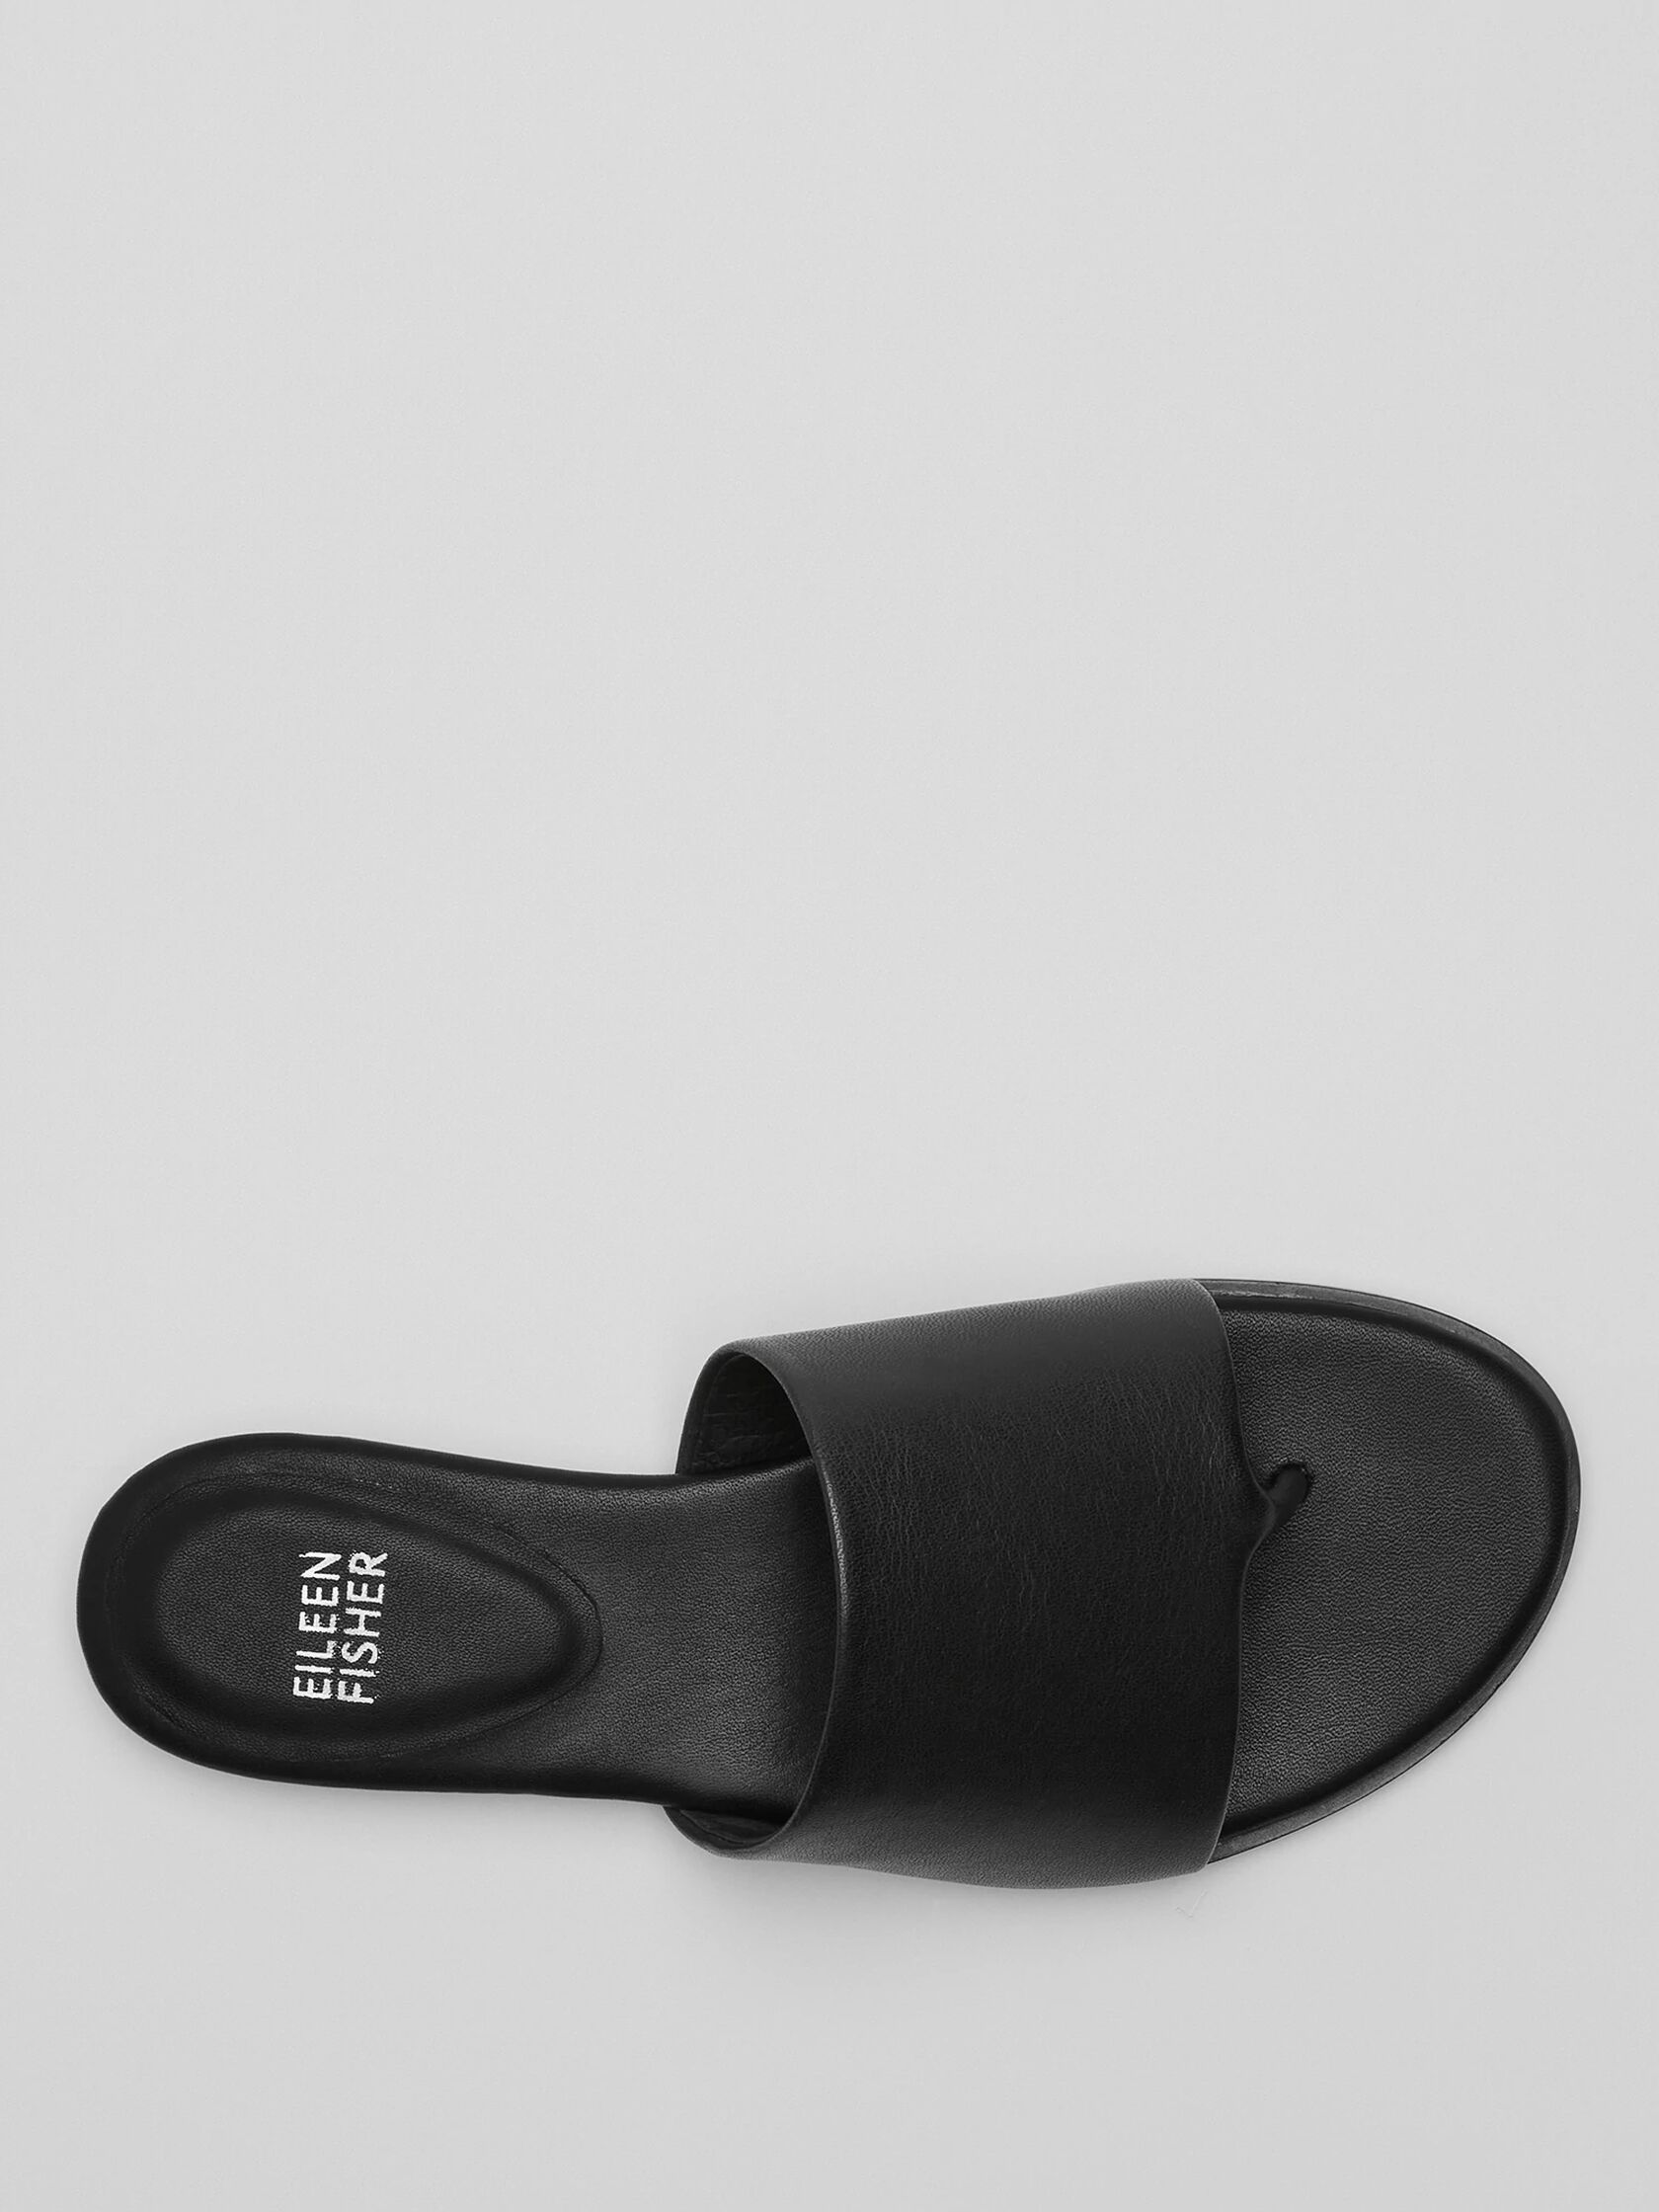 Edge Leather Slide Sandal